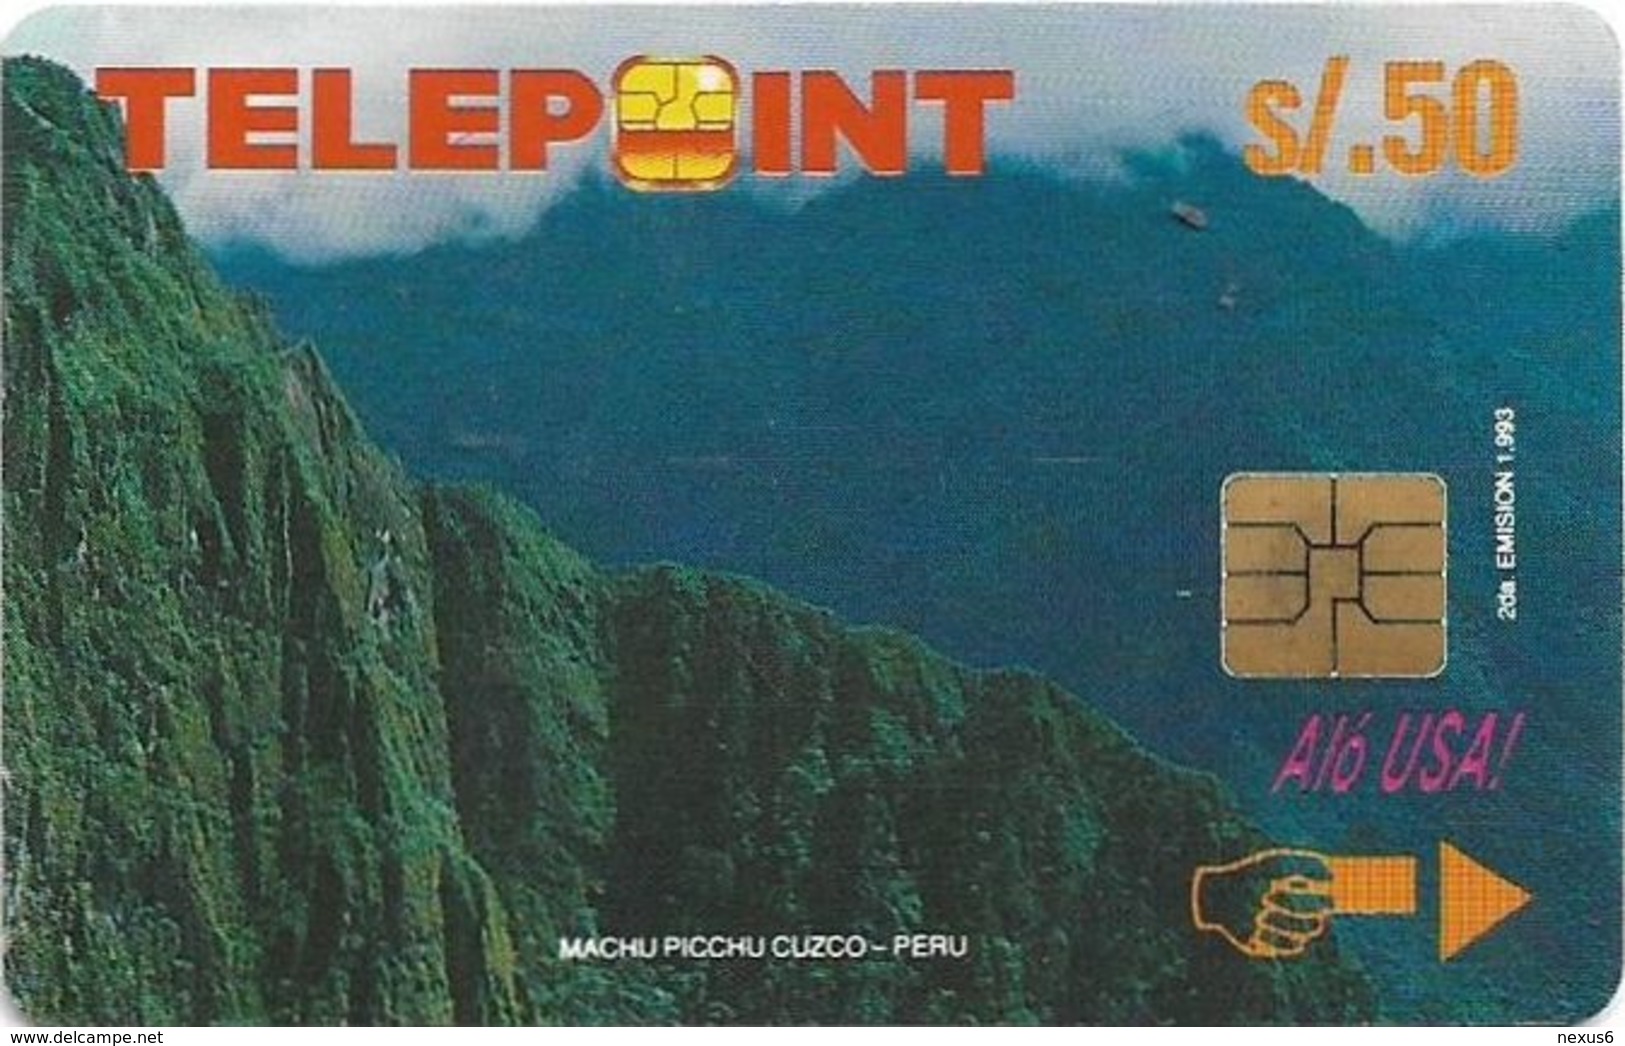 Peru - Telepoint - Machu Picchu Puzzle Piece 2/4 (Reverse 'Telecable'), 50Sol, 8.500ex, Used - Pérou